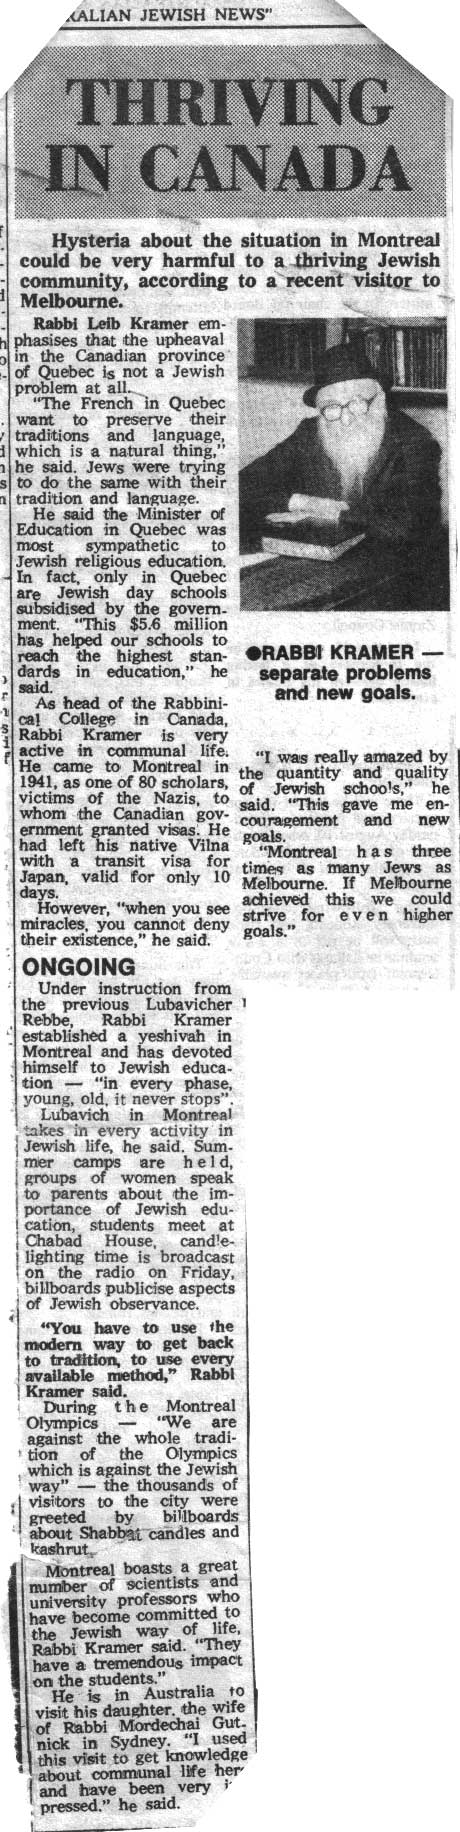 Article-published-during-Rabbi-Kramers-visit-to-Australia-in-1977.-Australian-Jewish-News